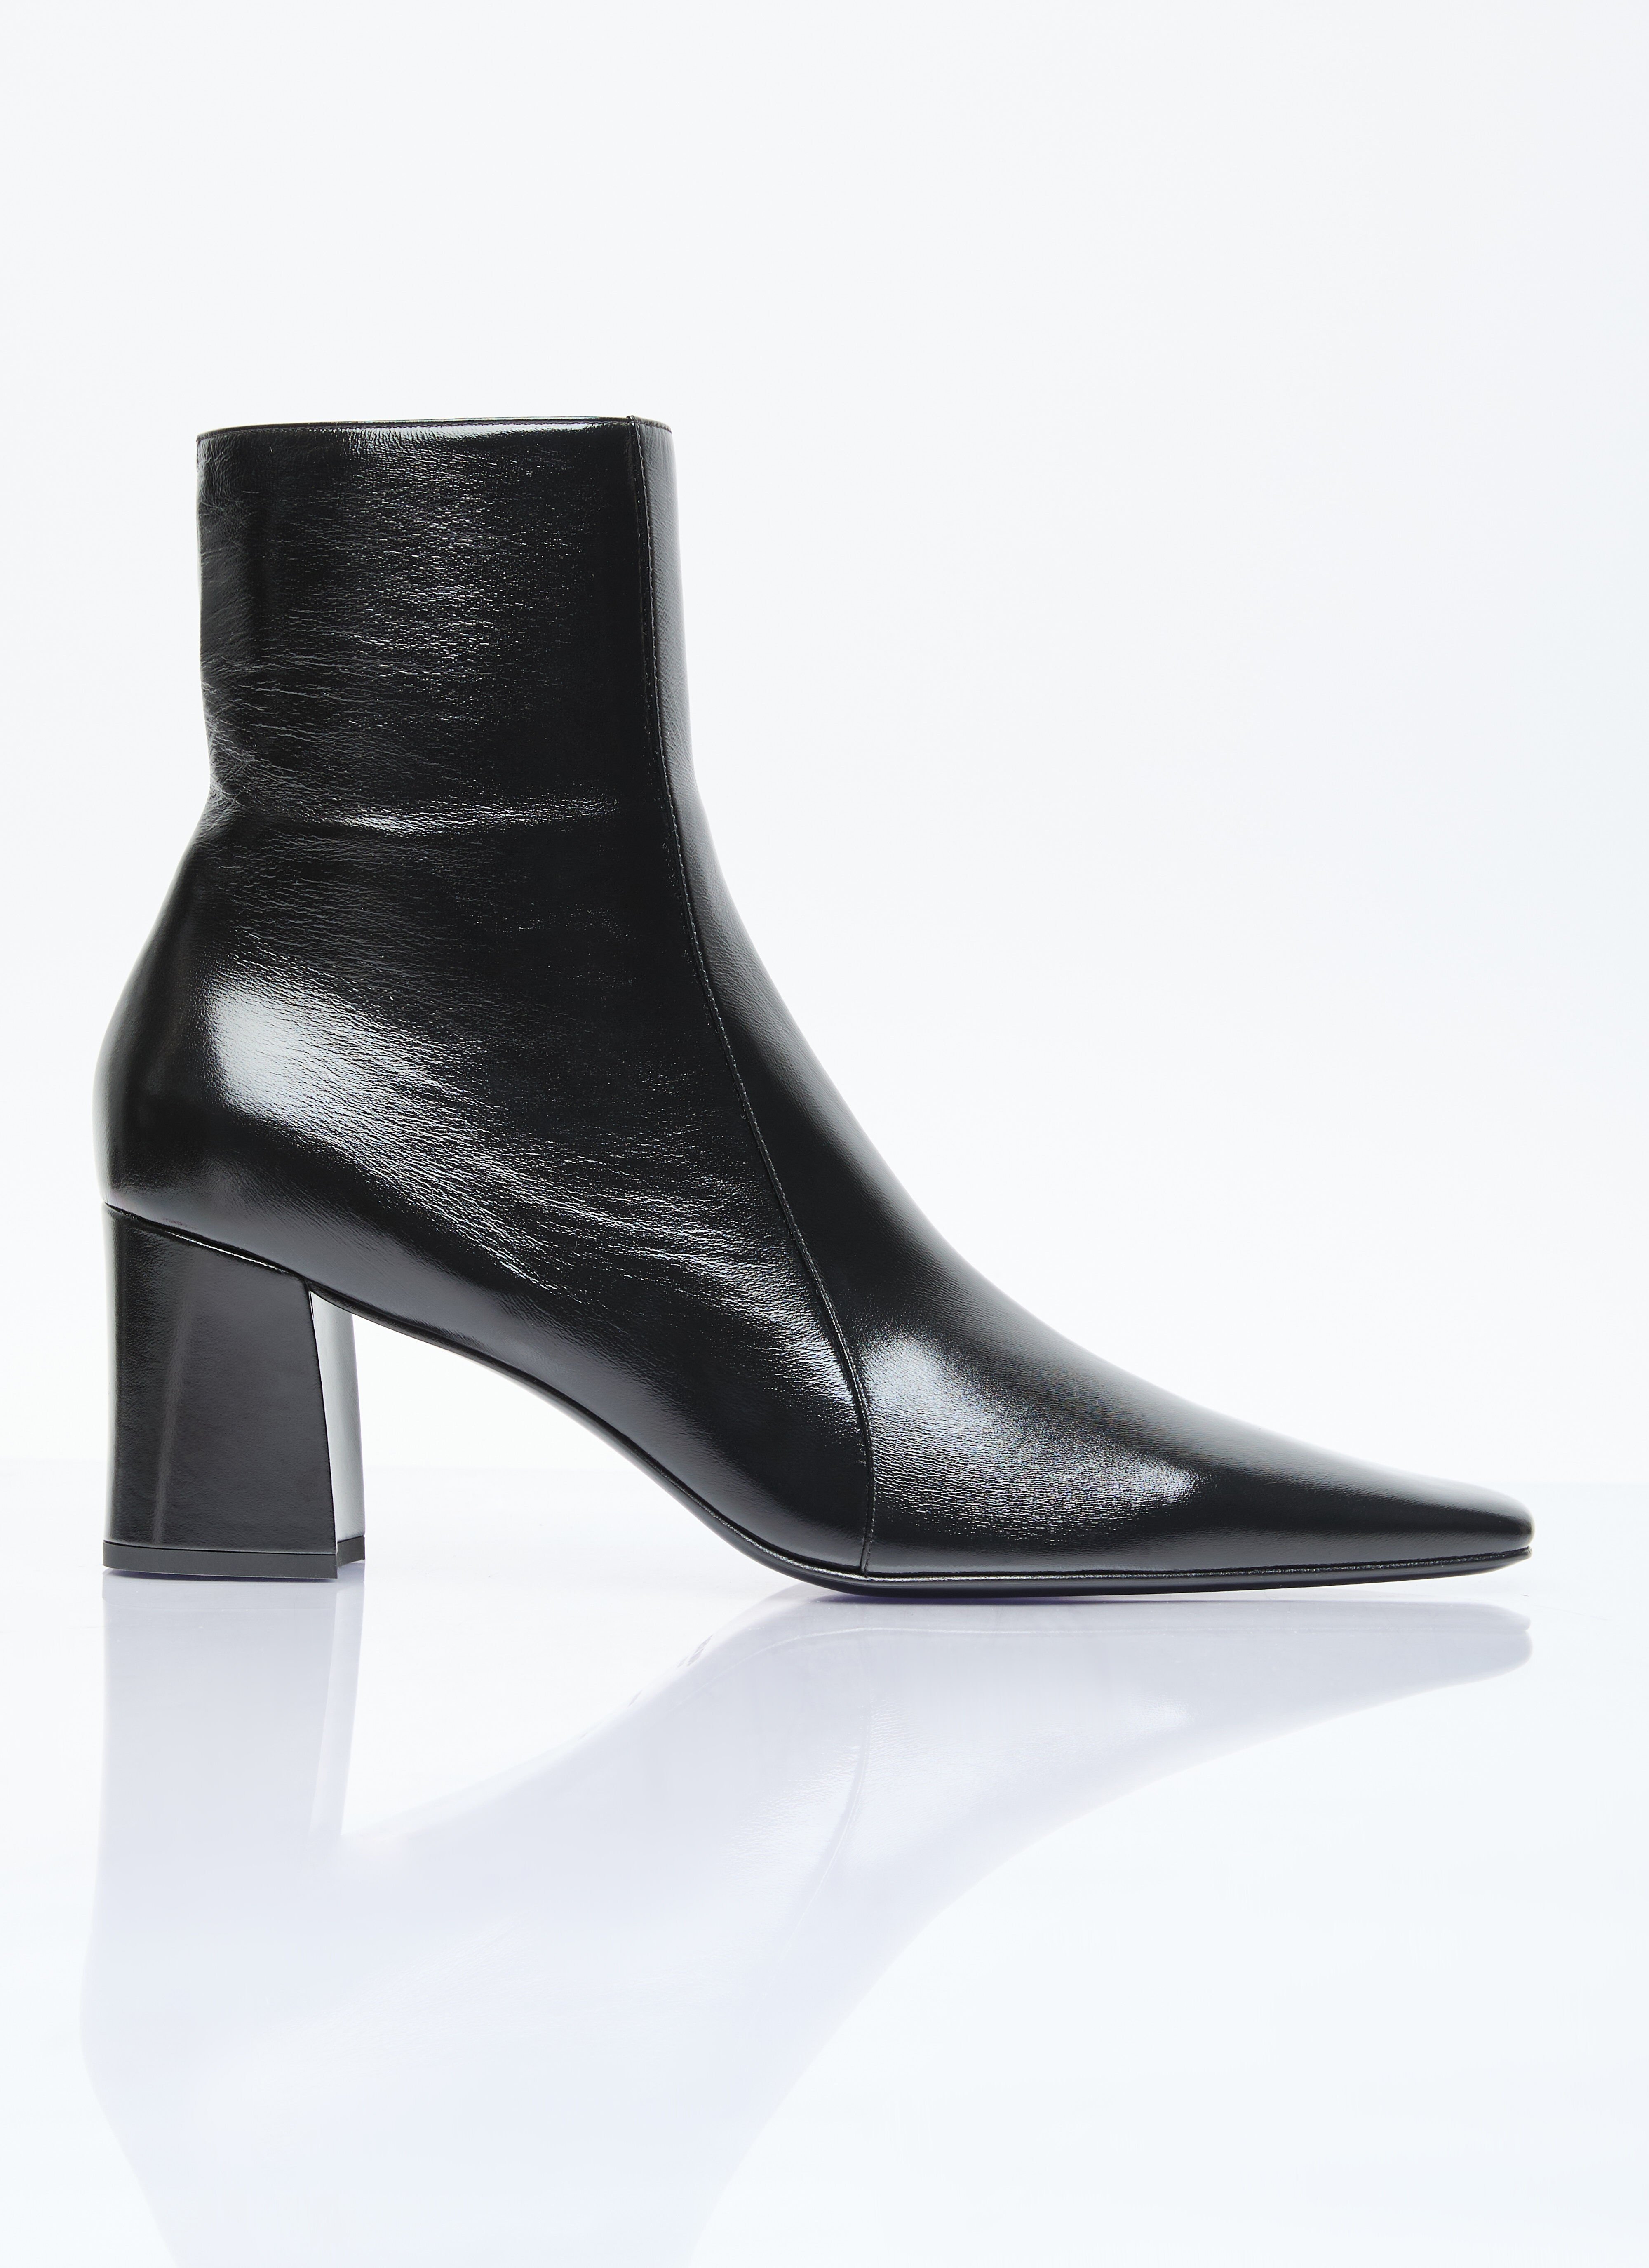 Vivienne Westwood Rainer Zipped Boots Grey vvw0156010